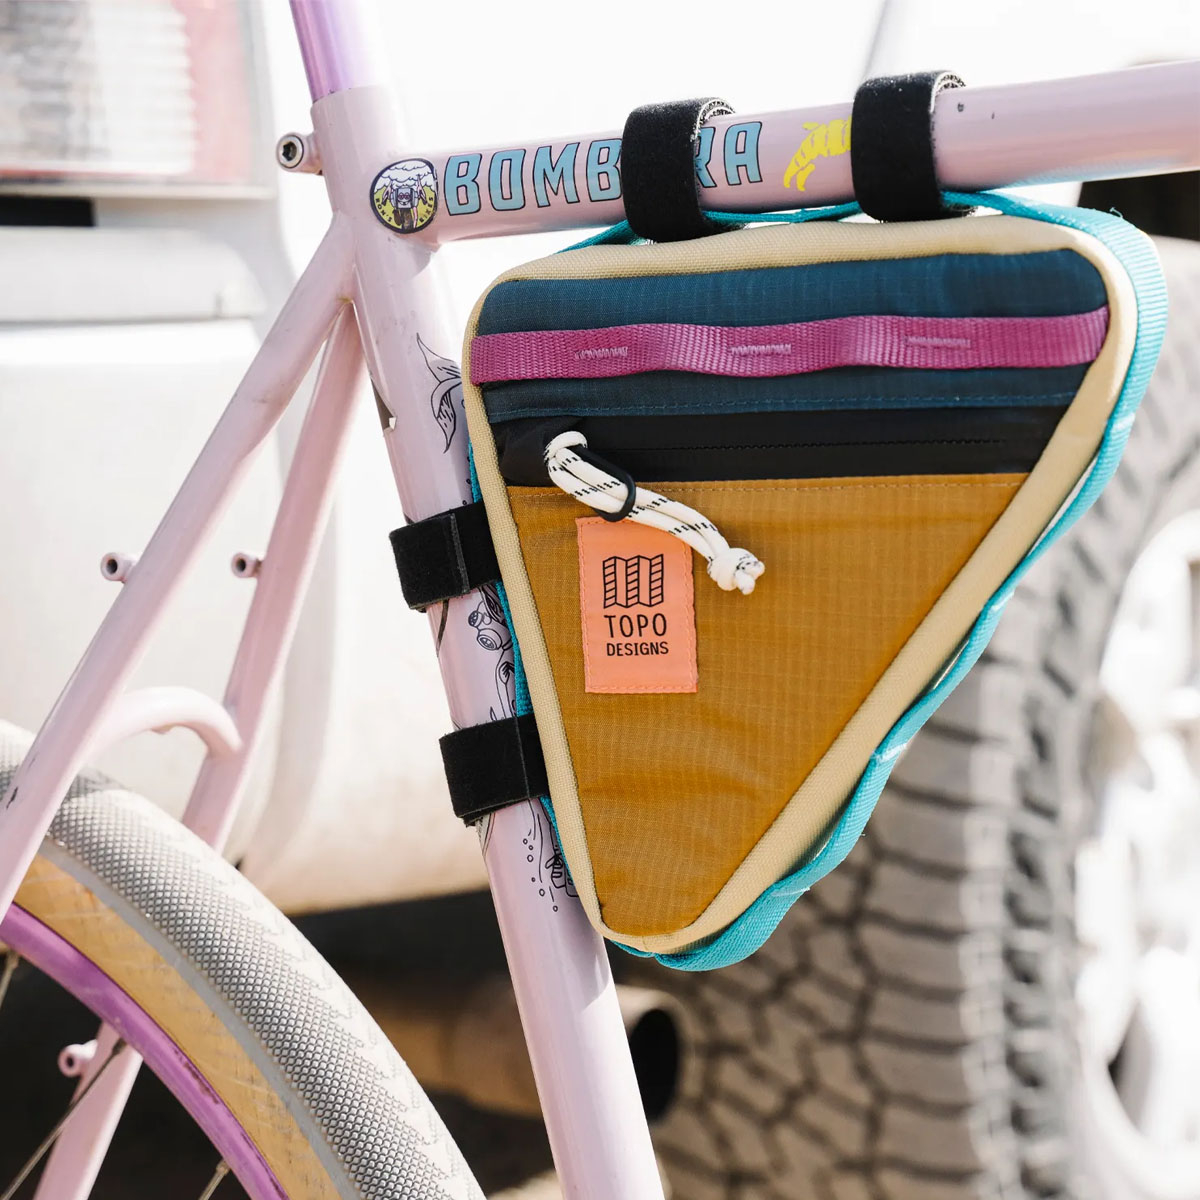 Topo Designs Bike Frame Bag, Triangular main compartment